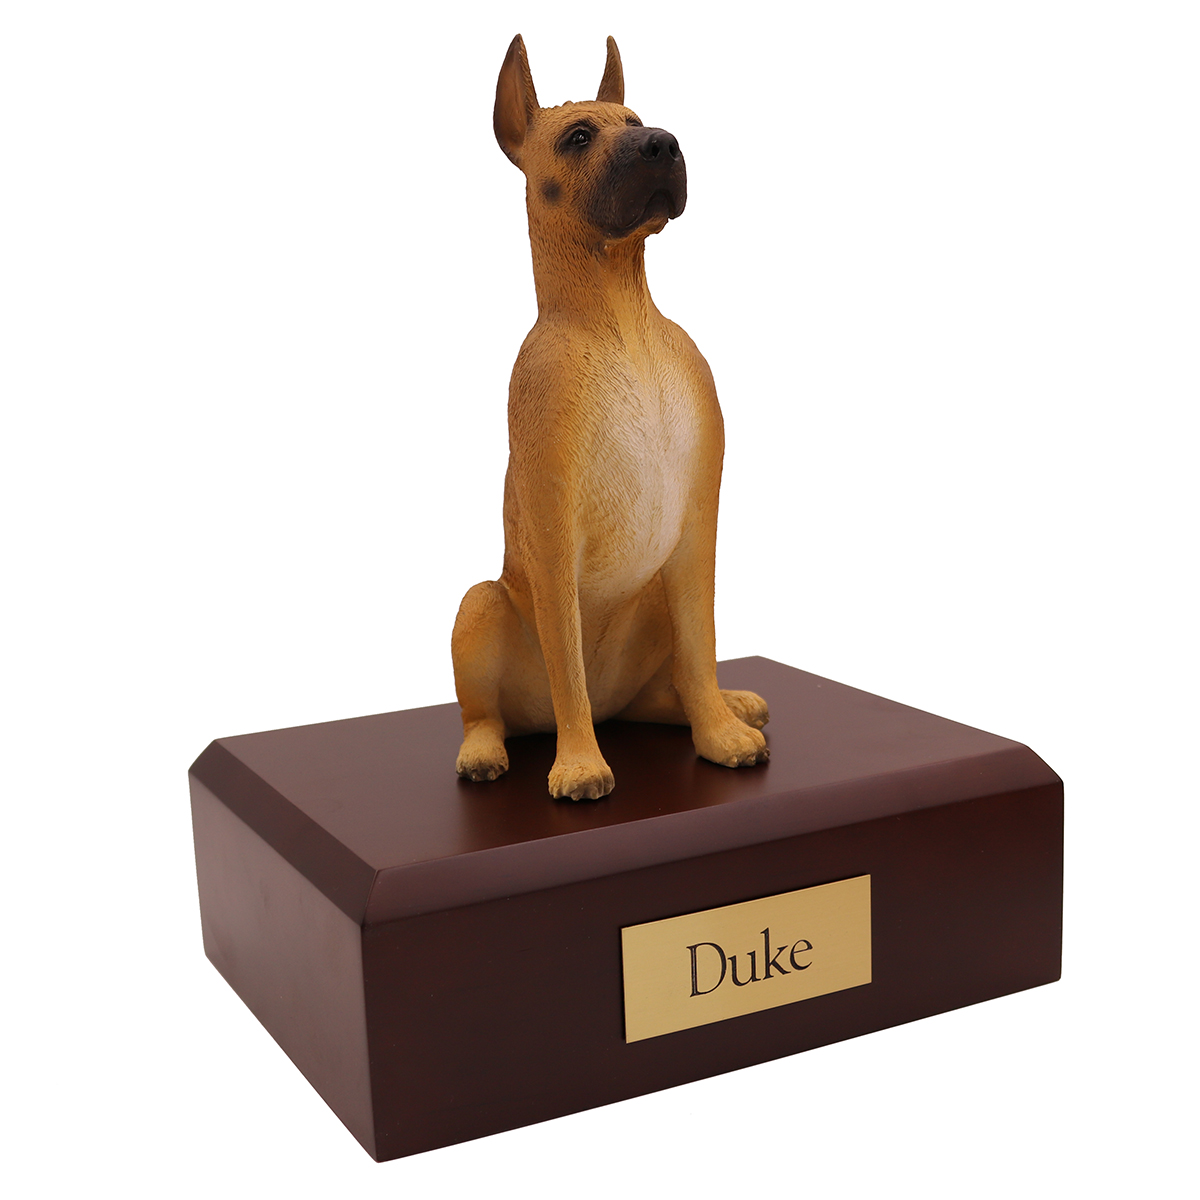 Dog, Great Dane, Fawn - Figurine Urn